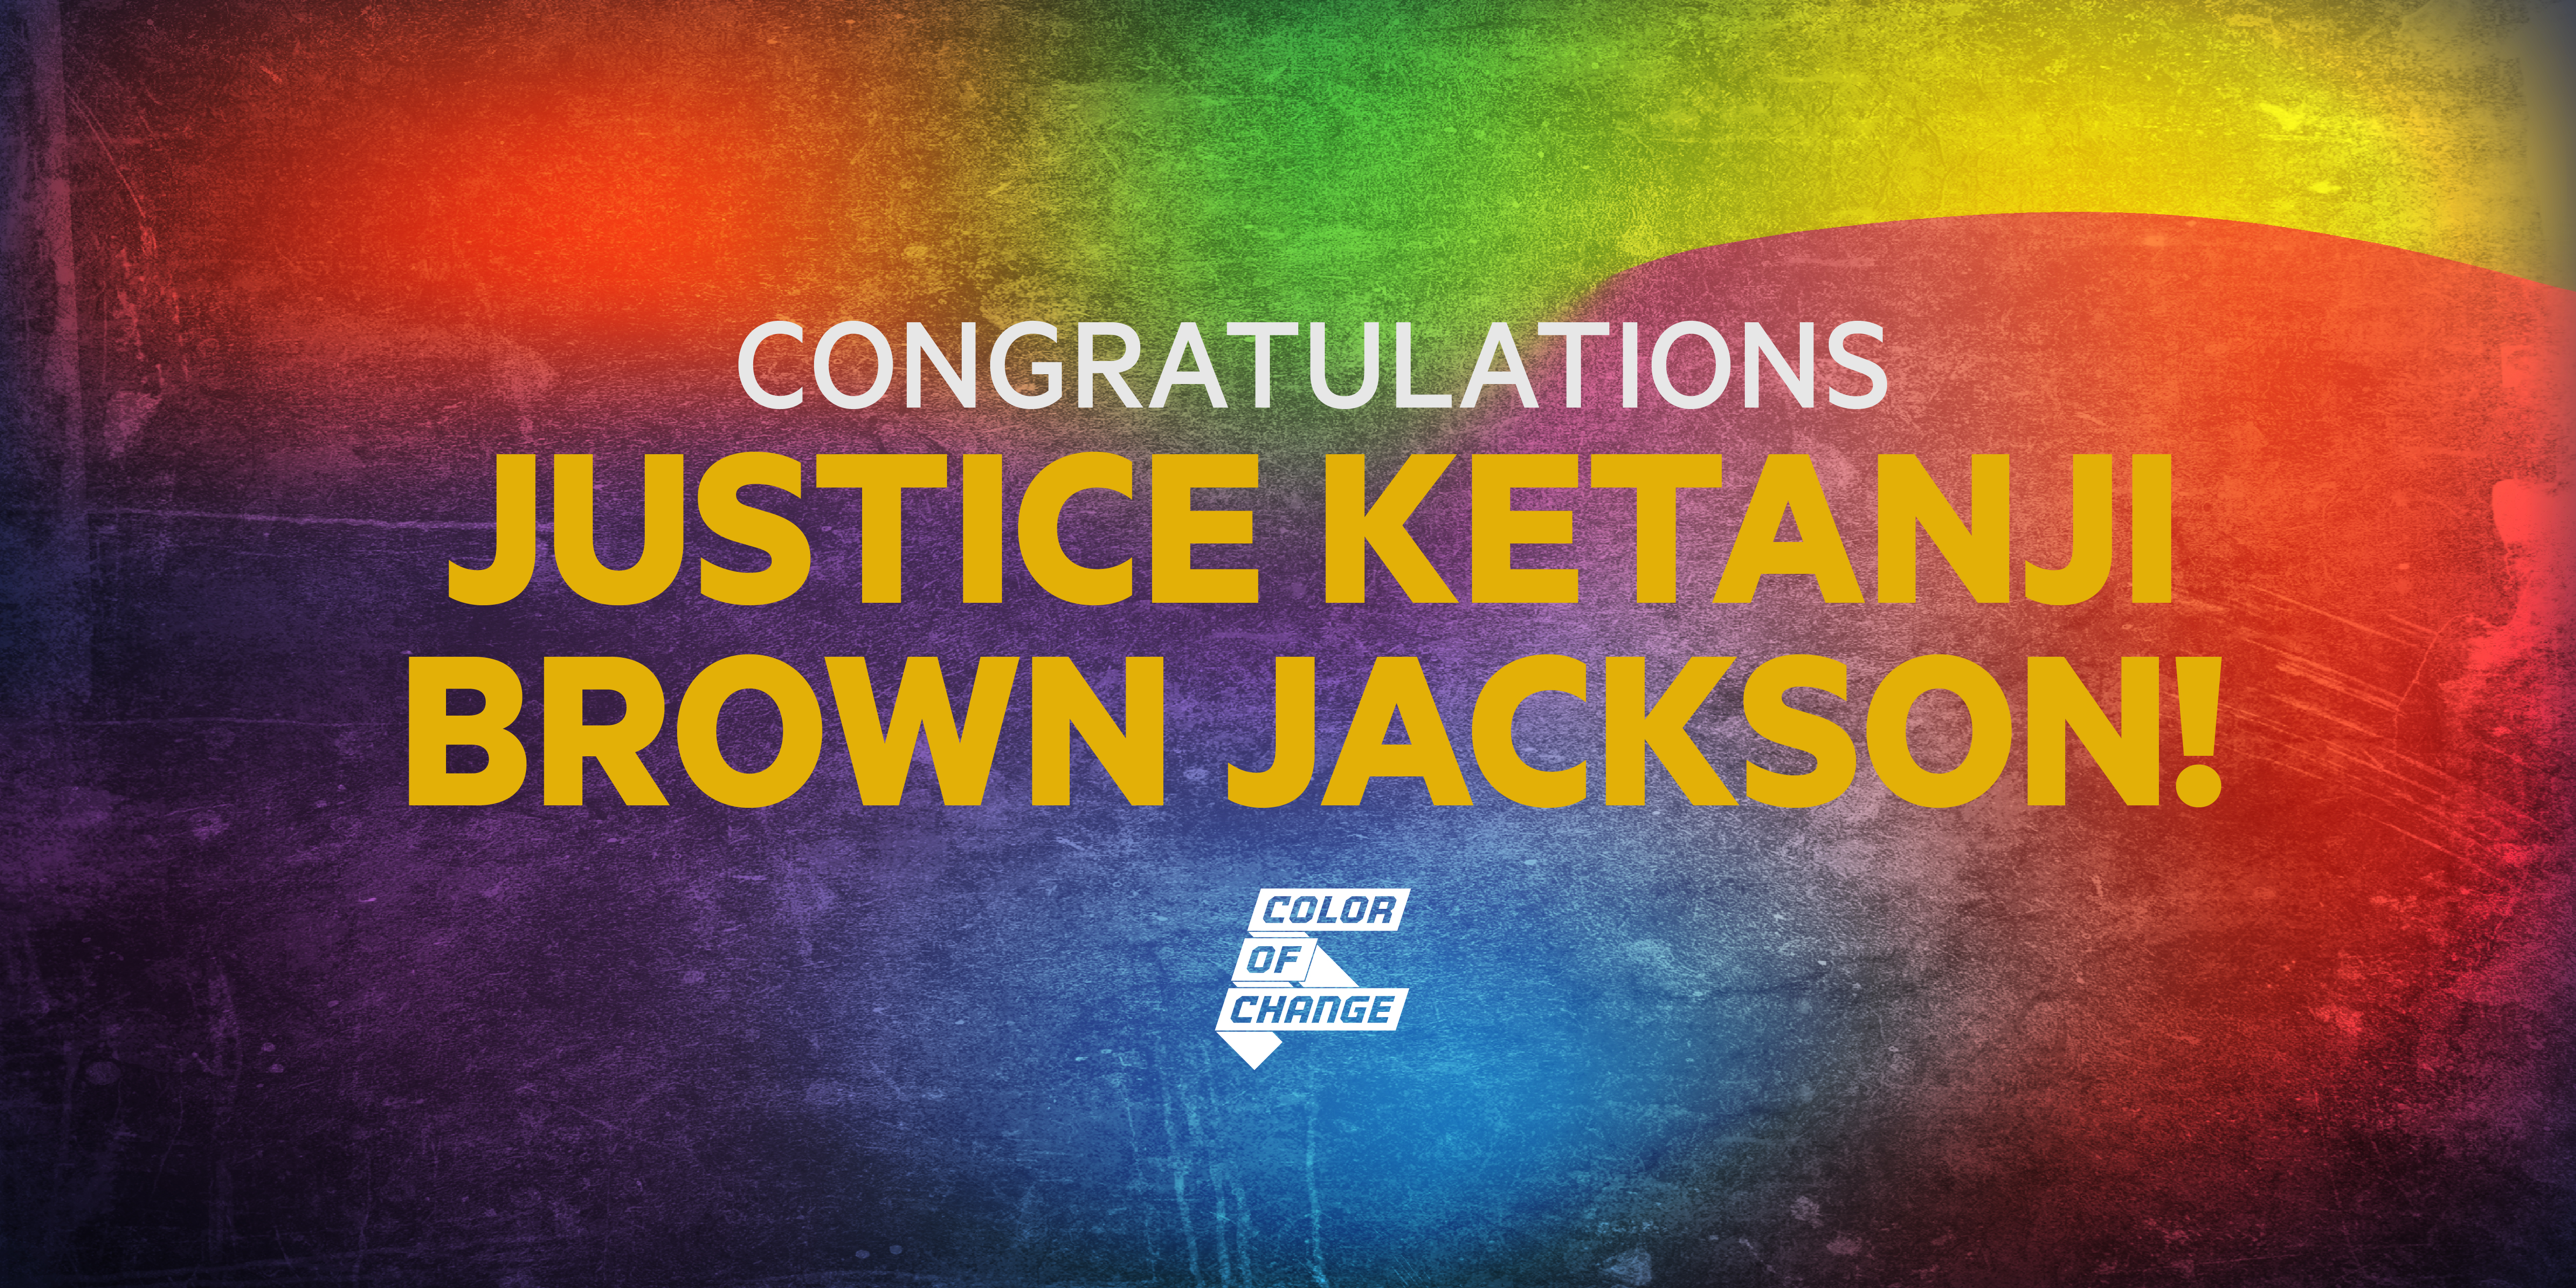 Congratulations Justice Ketanji Brown Jackson!